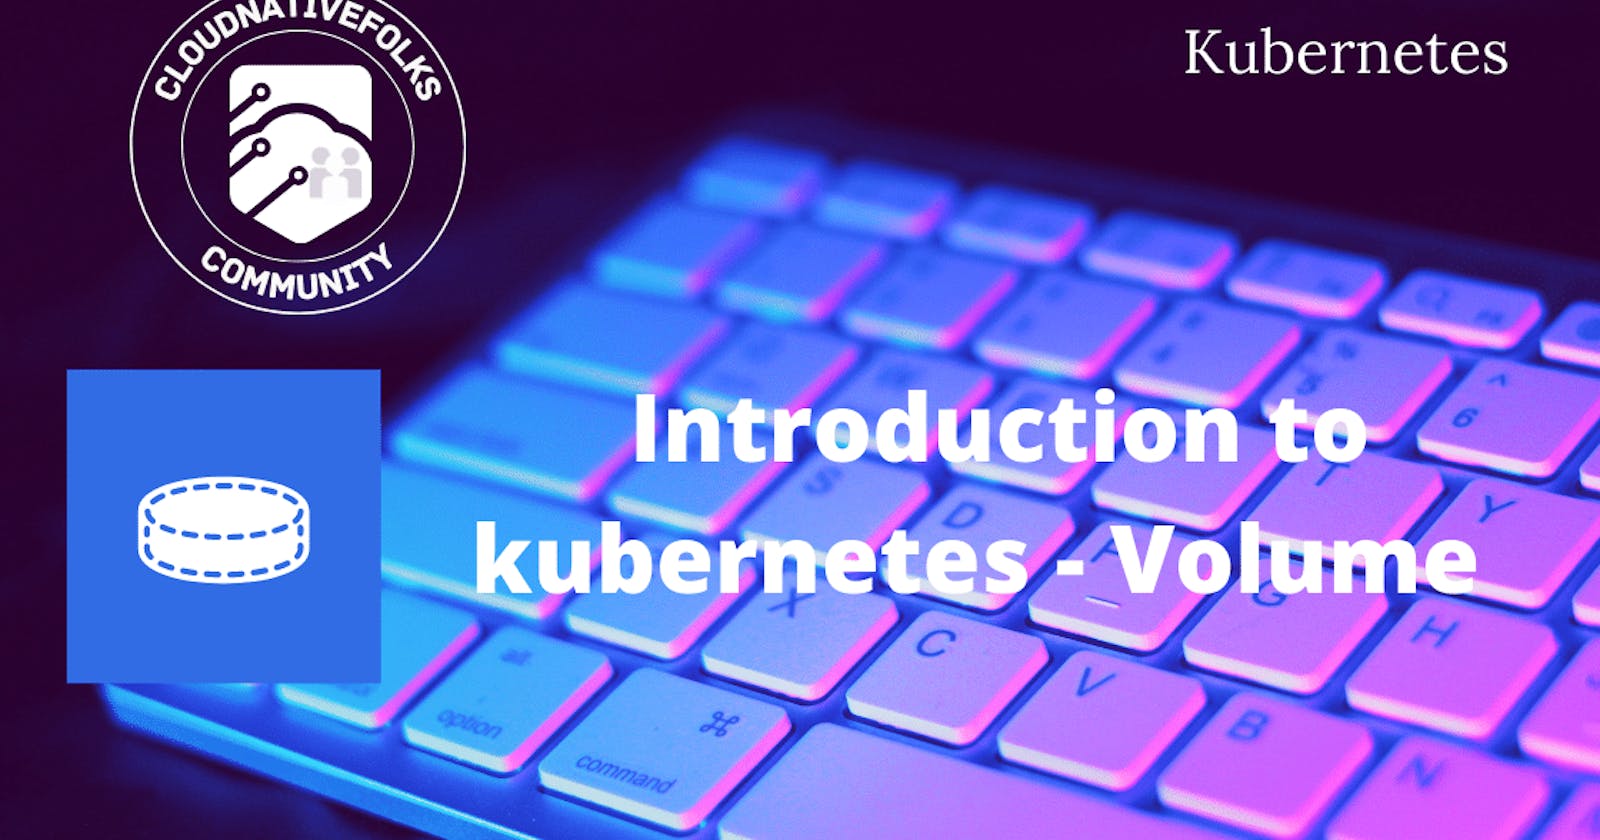 Introduction to kubernetes - Volume